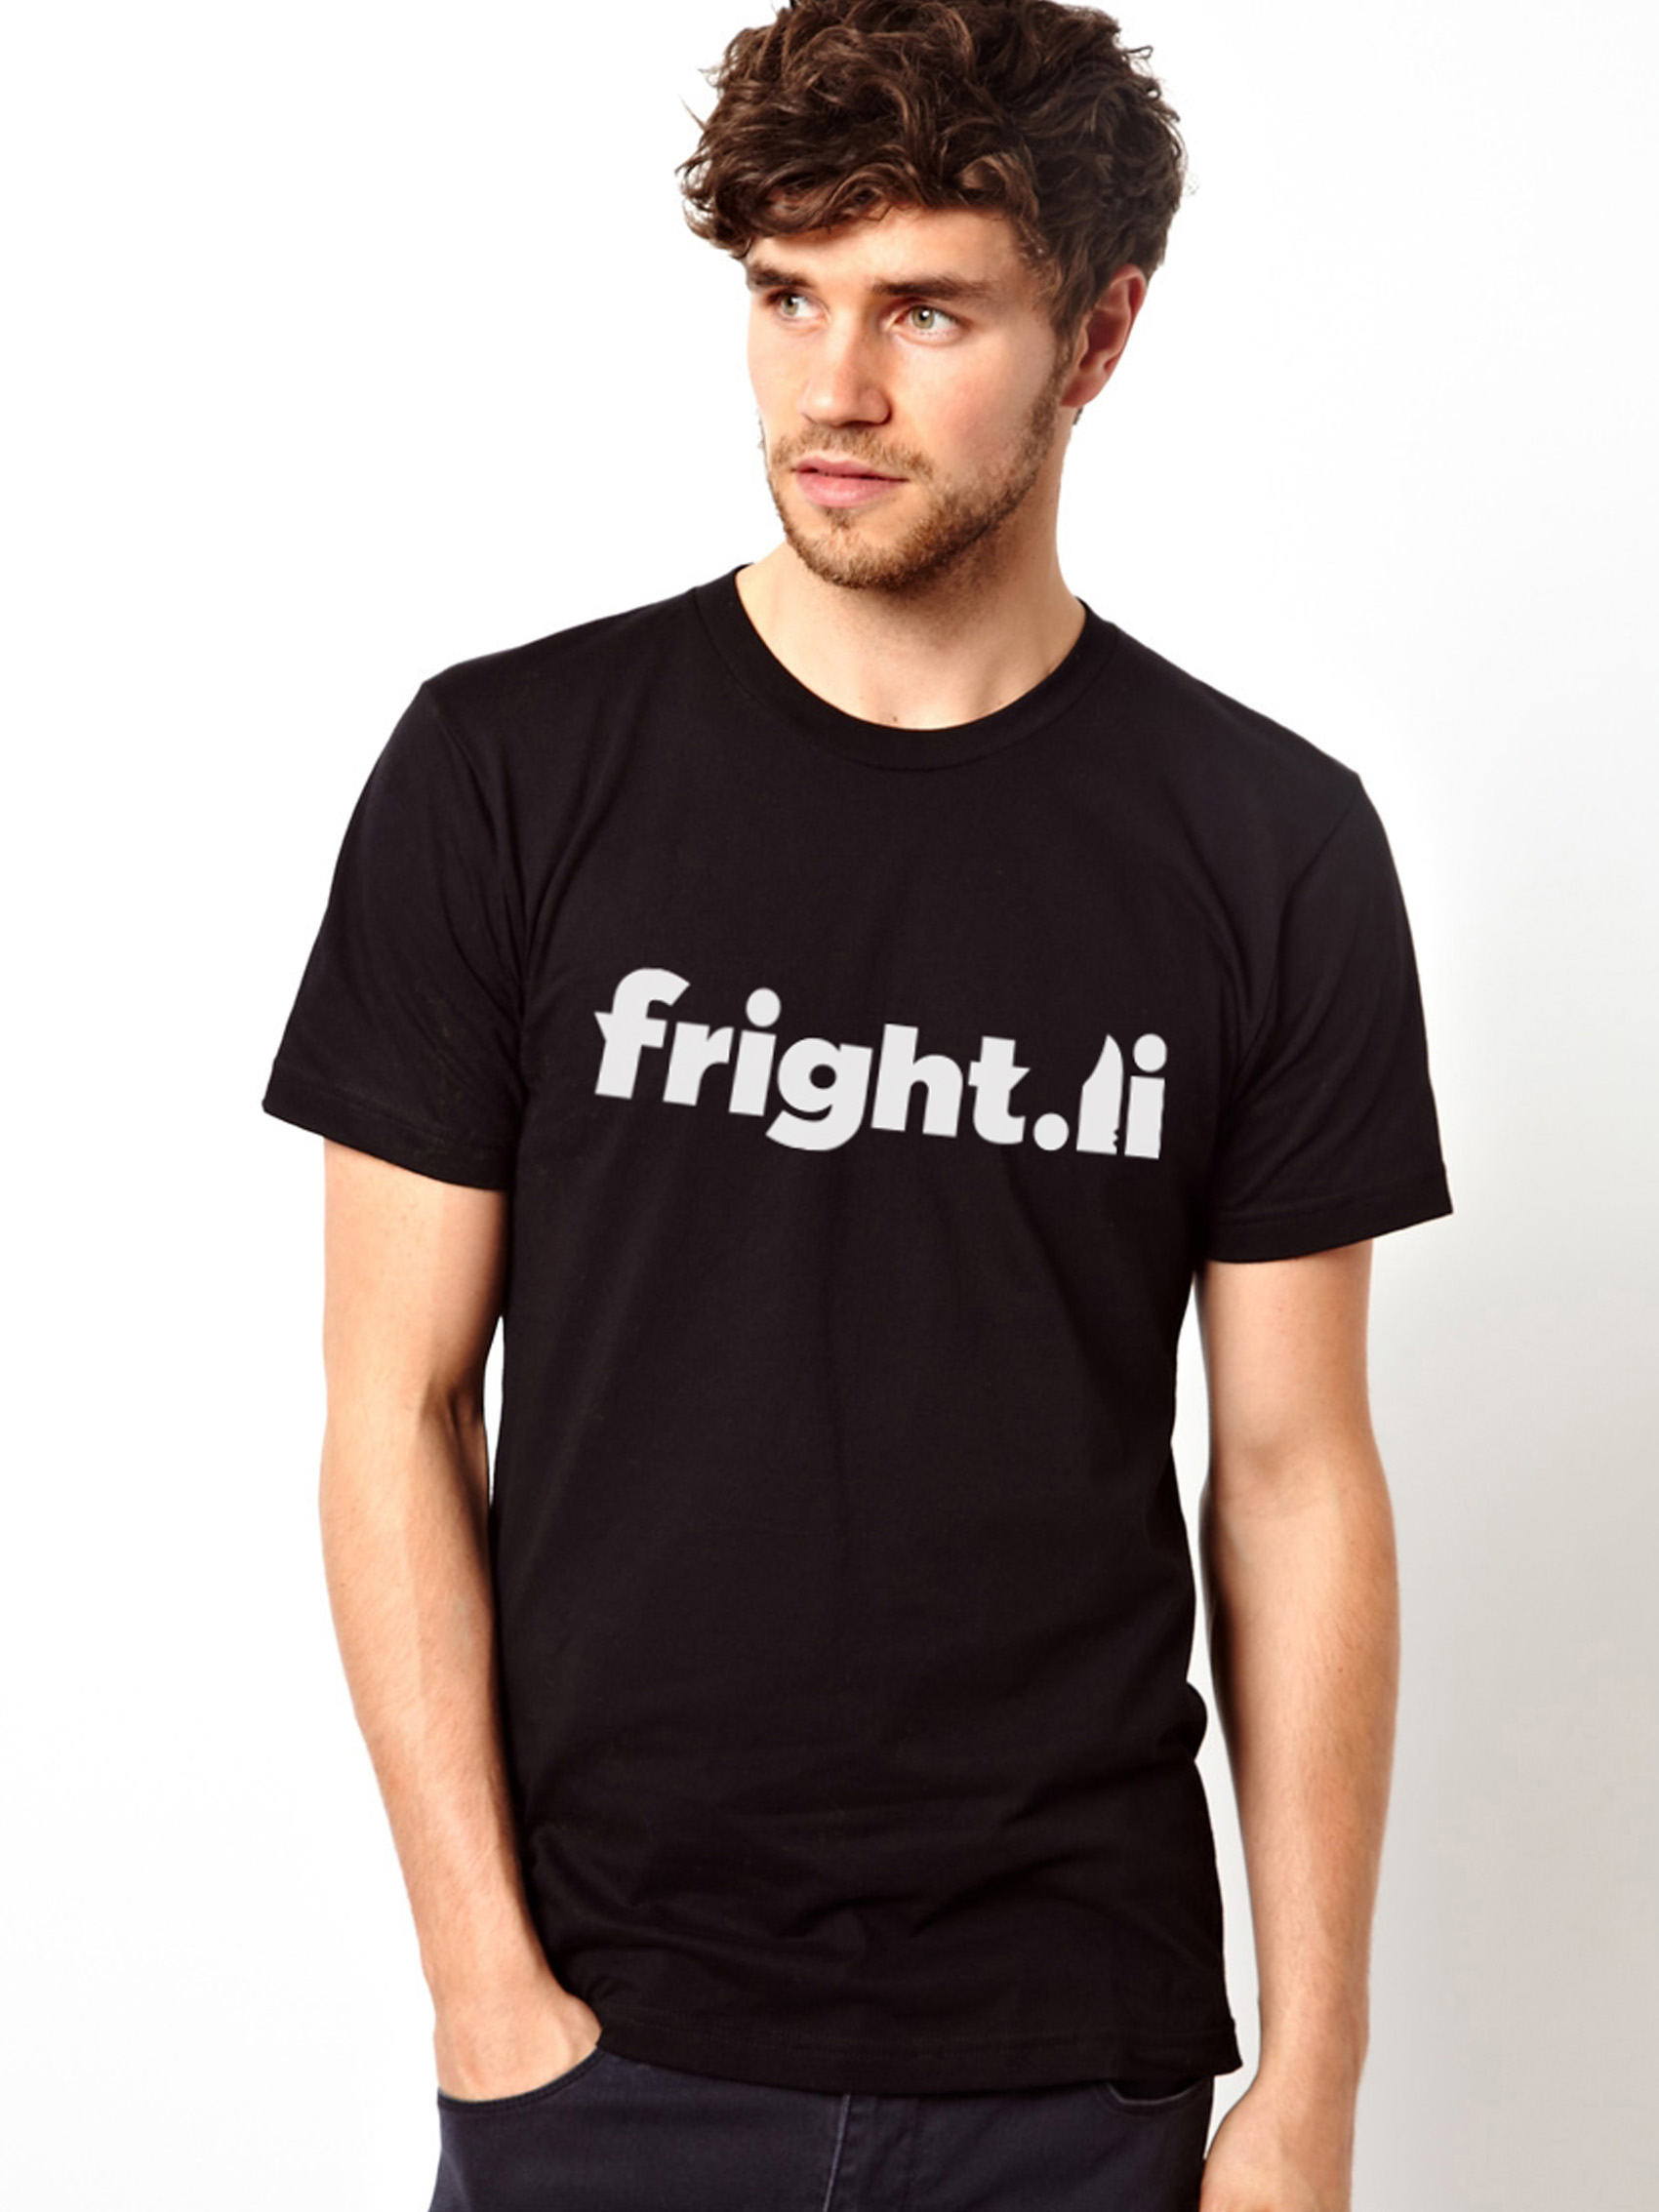 frightli-shirt